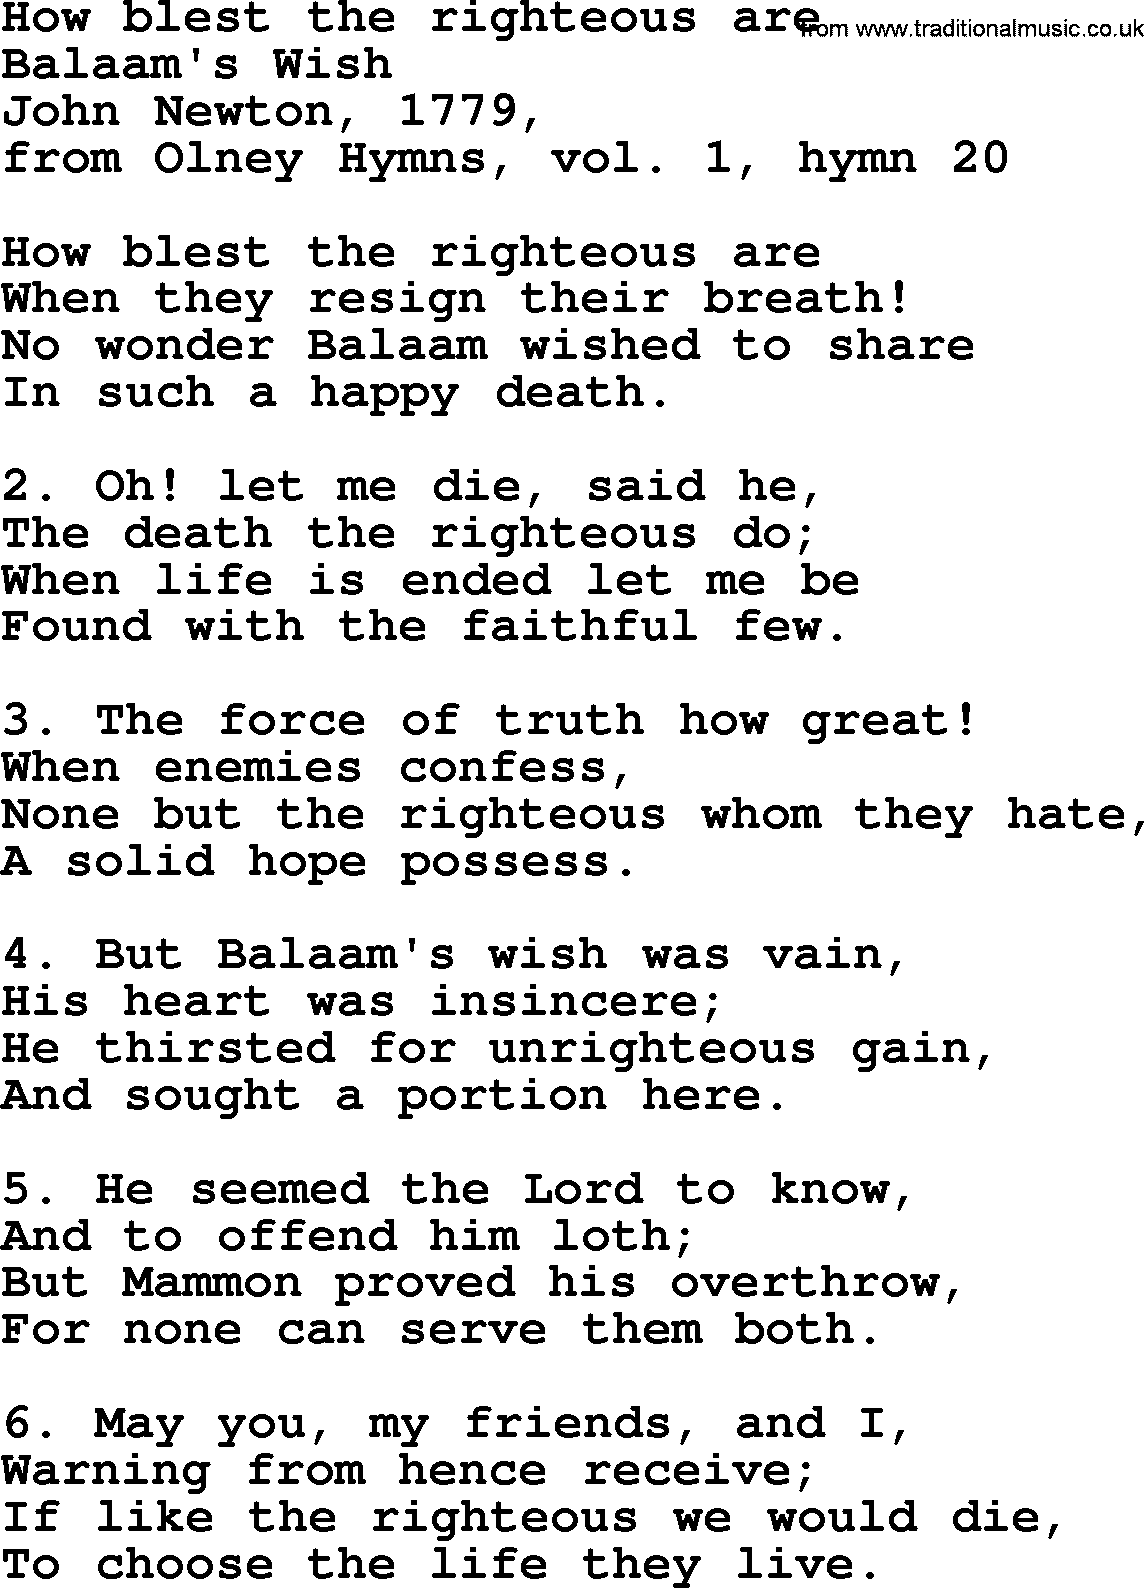 John Newton hymn: How Blest The Righteous Are, lyrics